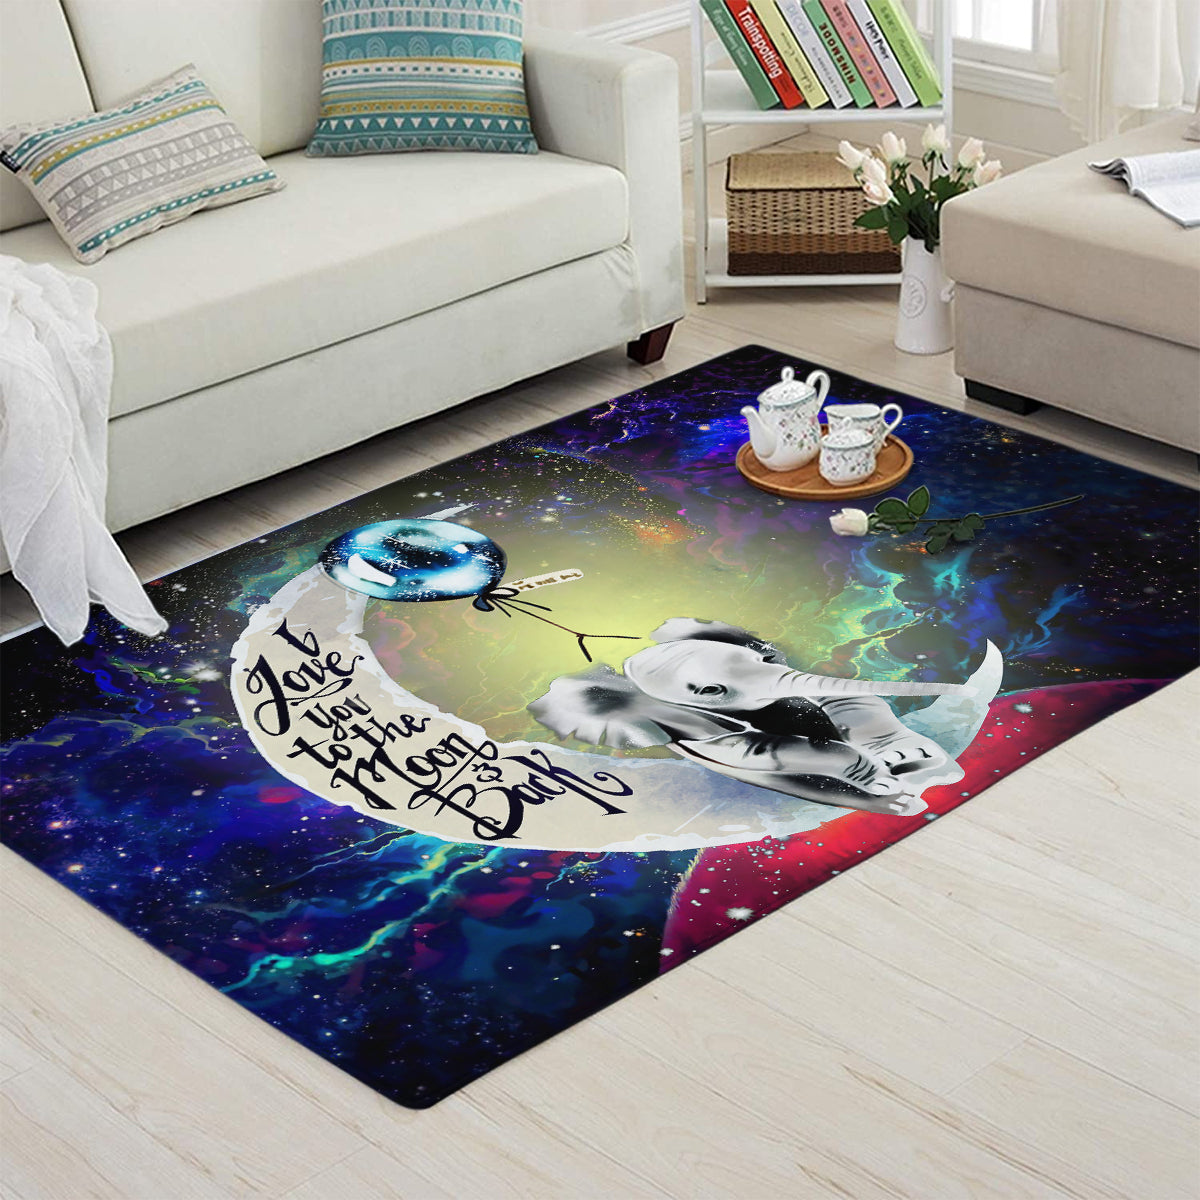 Elephant Love You To The Moon Galaxy Carpet Rug Home Room Decor